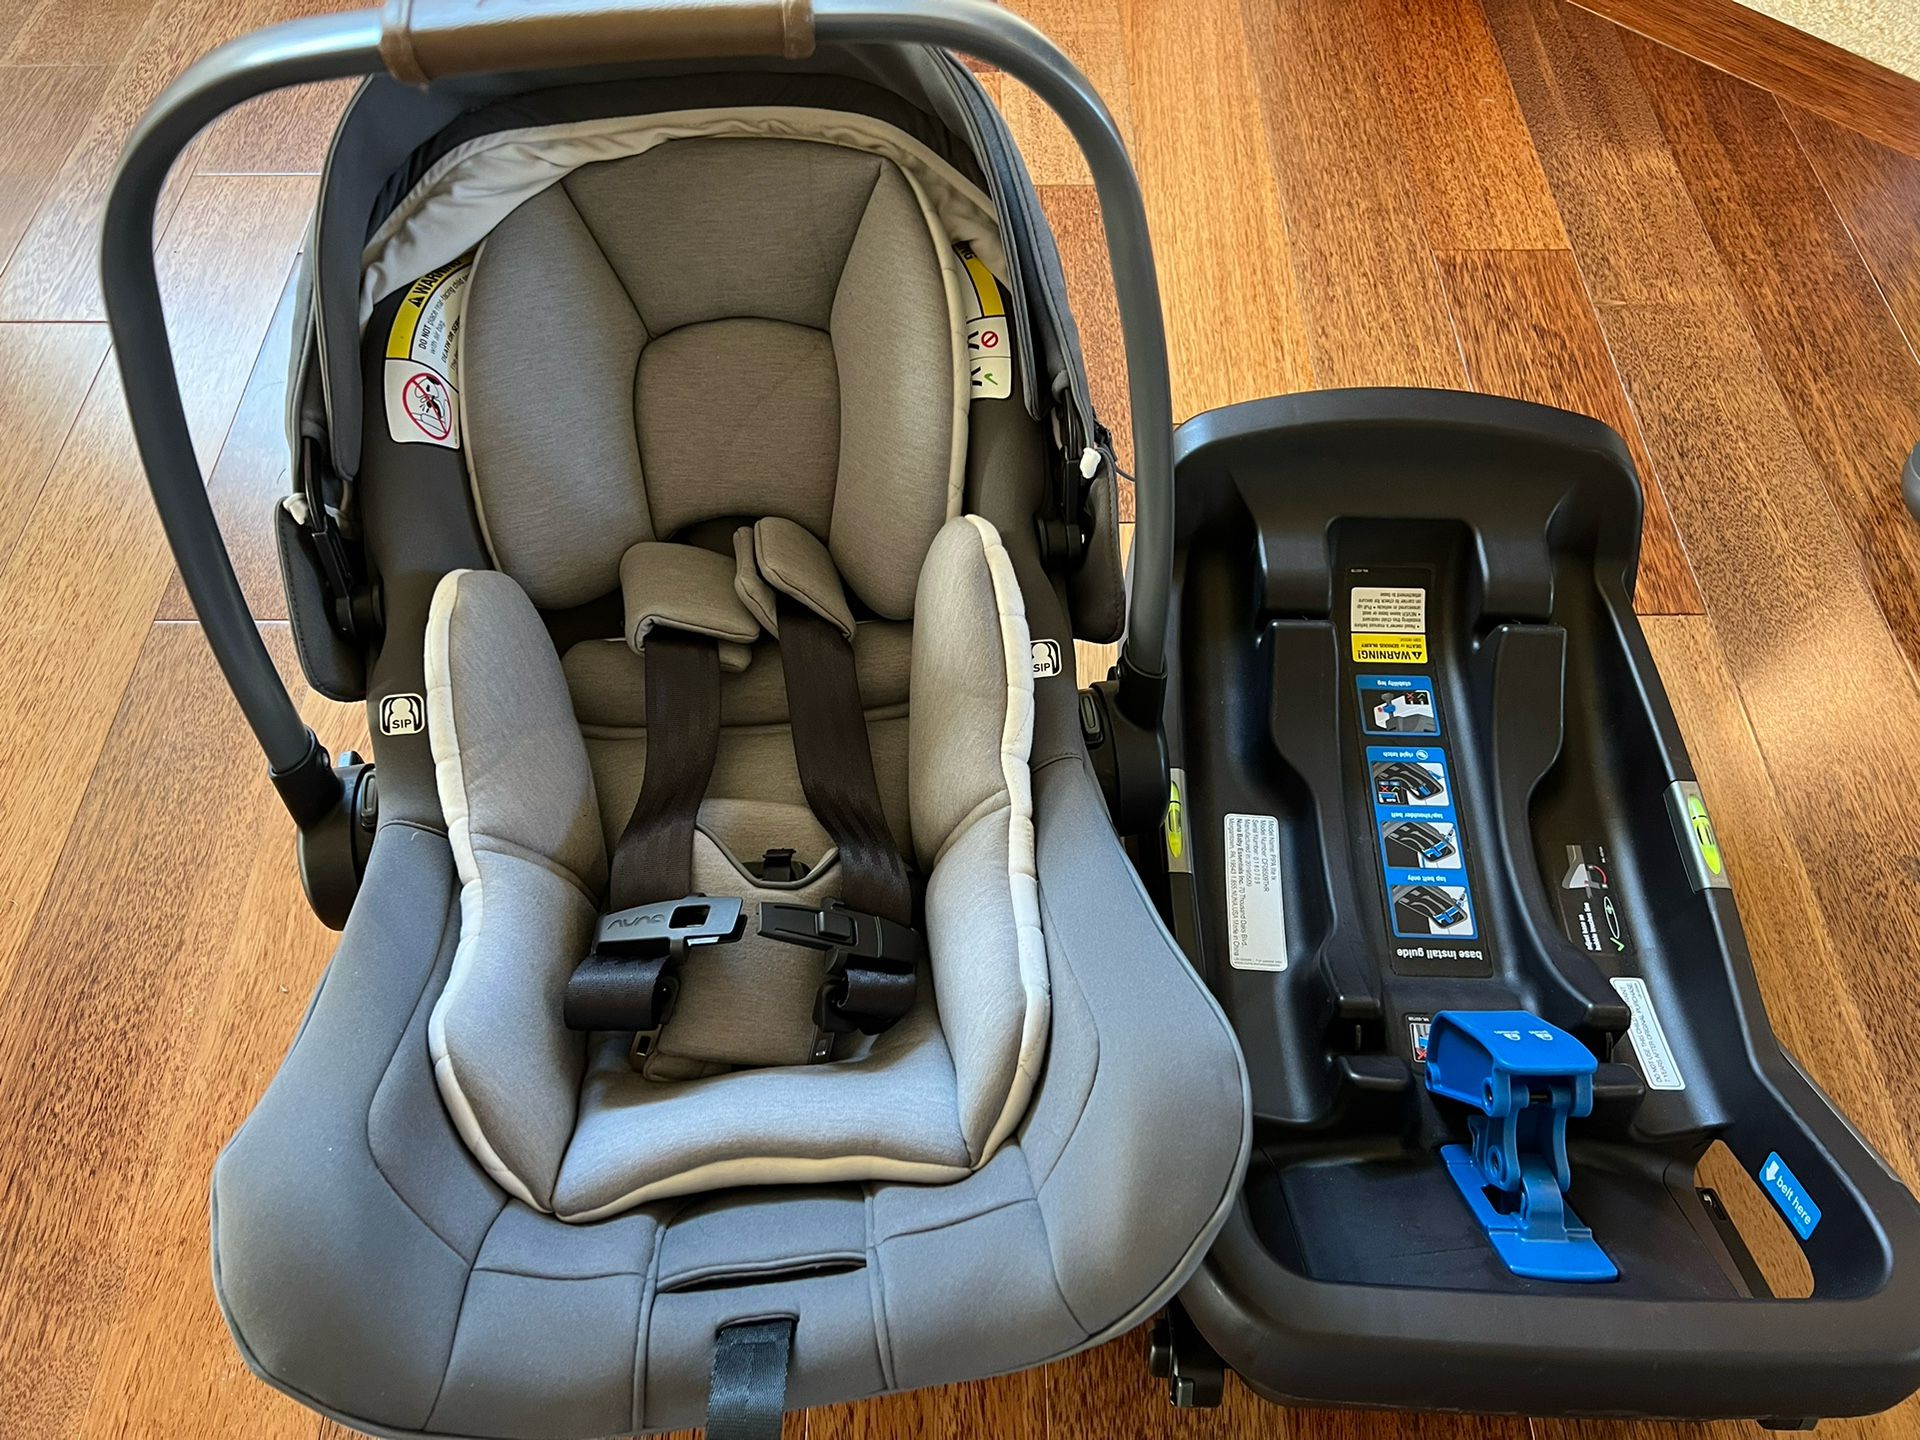 Nuna Infant Car Seat Pipa Lite